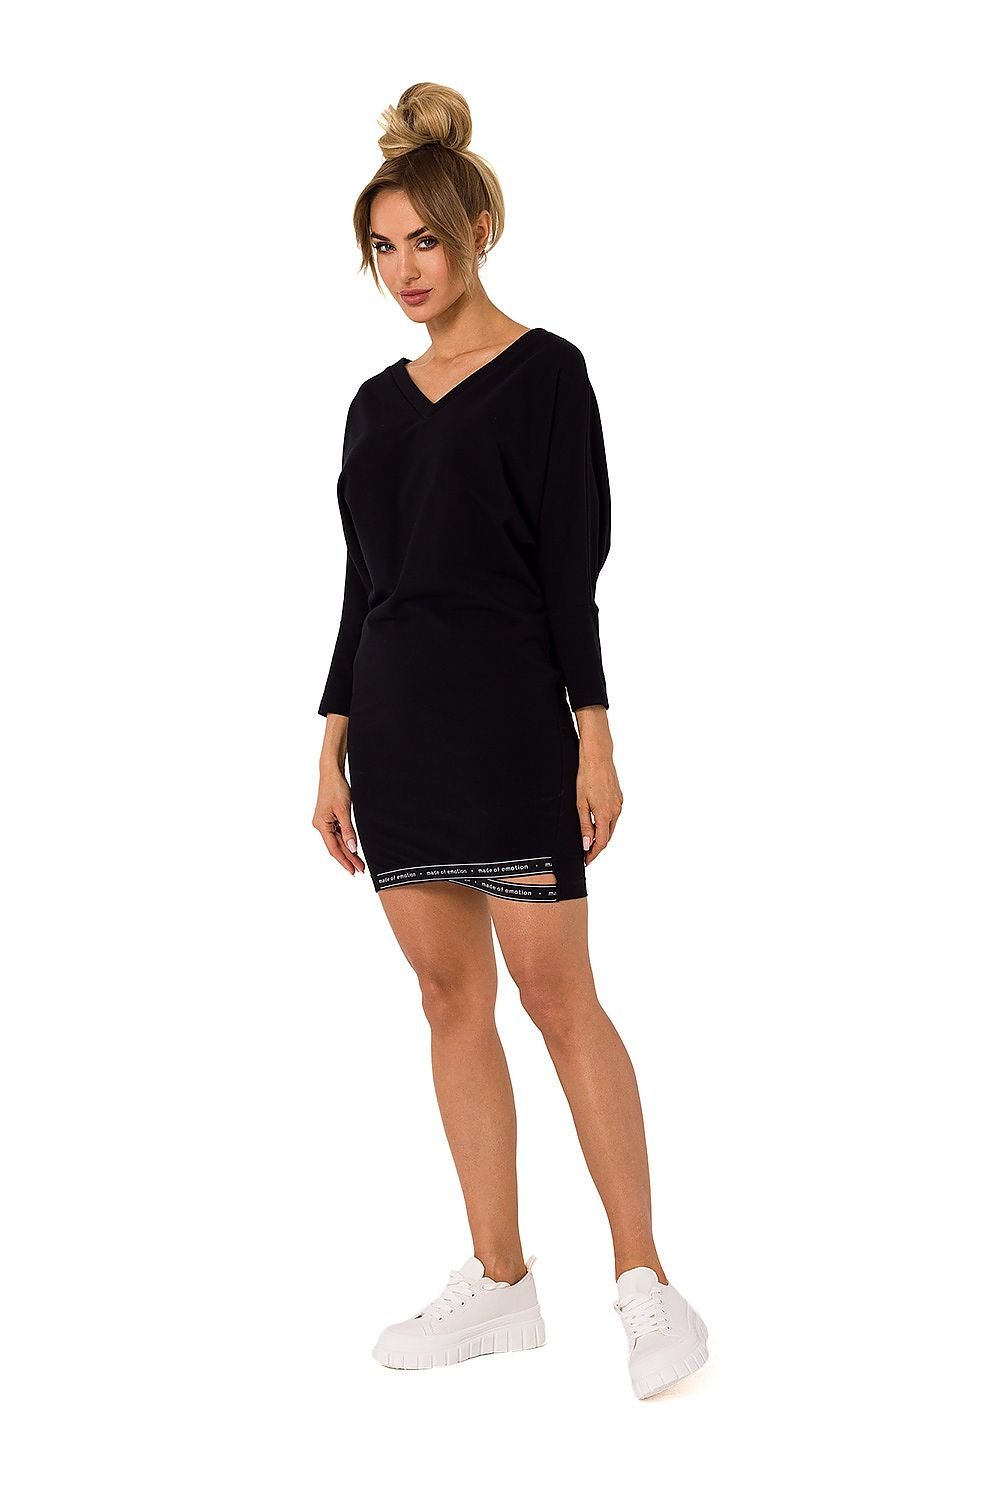 TEEK - Large V-Neck Sweatshirt Dress DRESS TEEK MH   